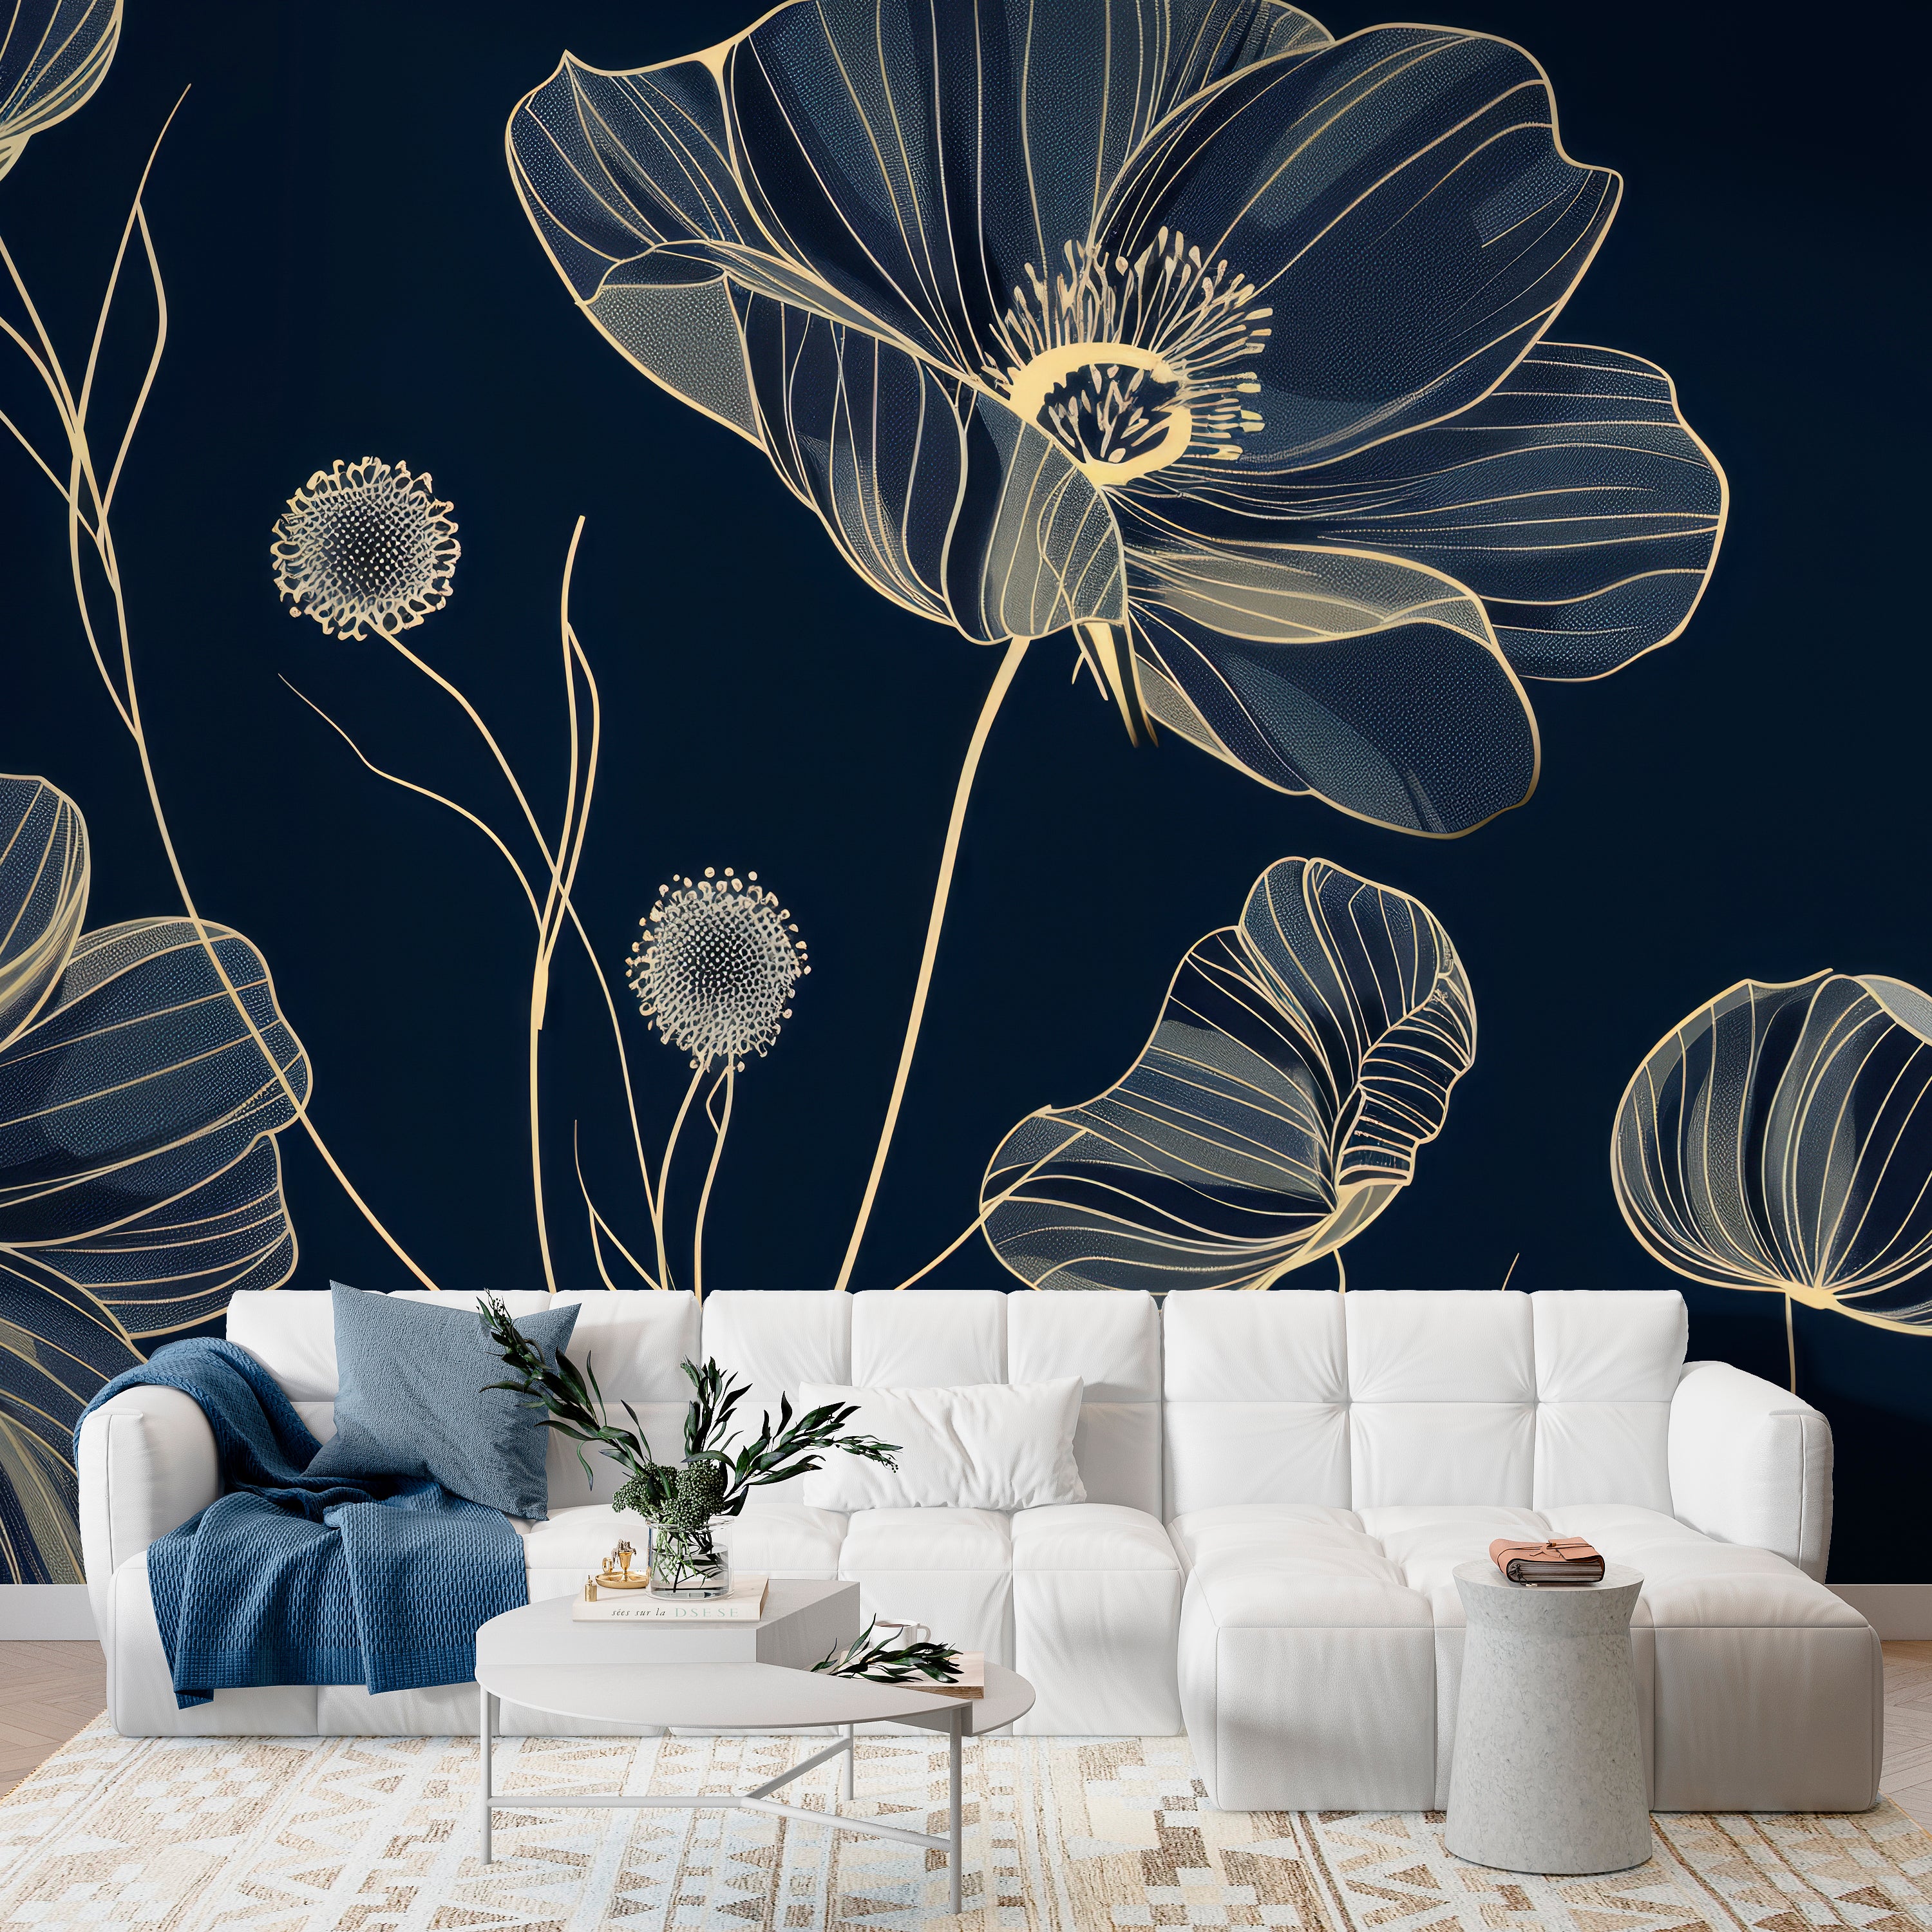 Cosmos Épanouis: Mitternachtsblaue Panorama-Tapete mit Blumenmustern